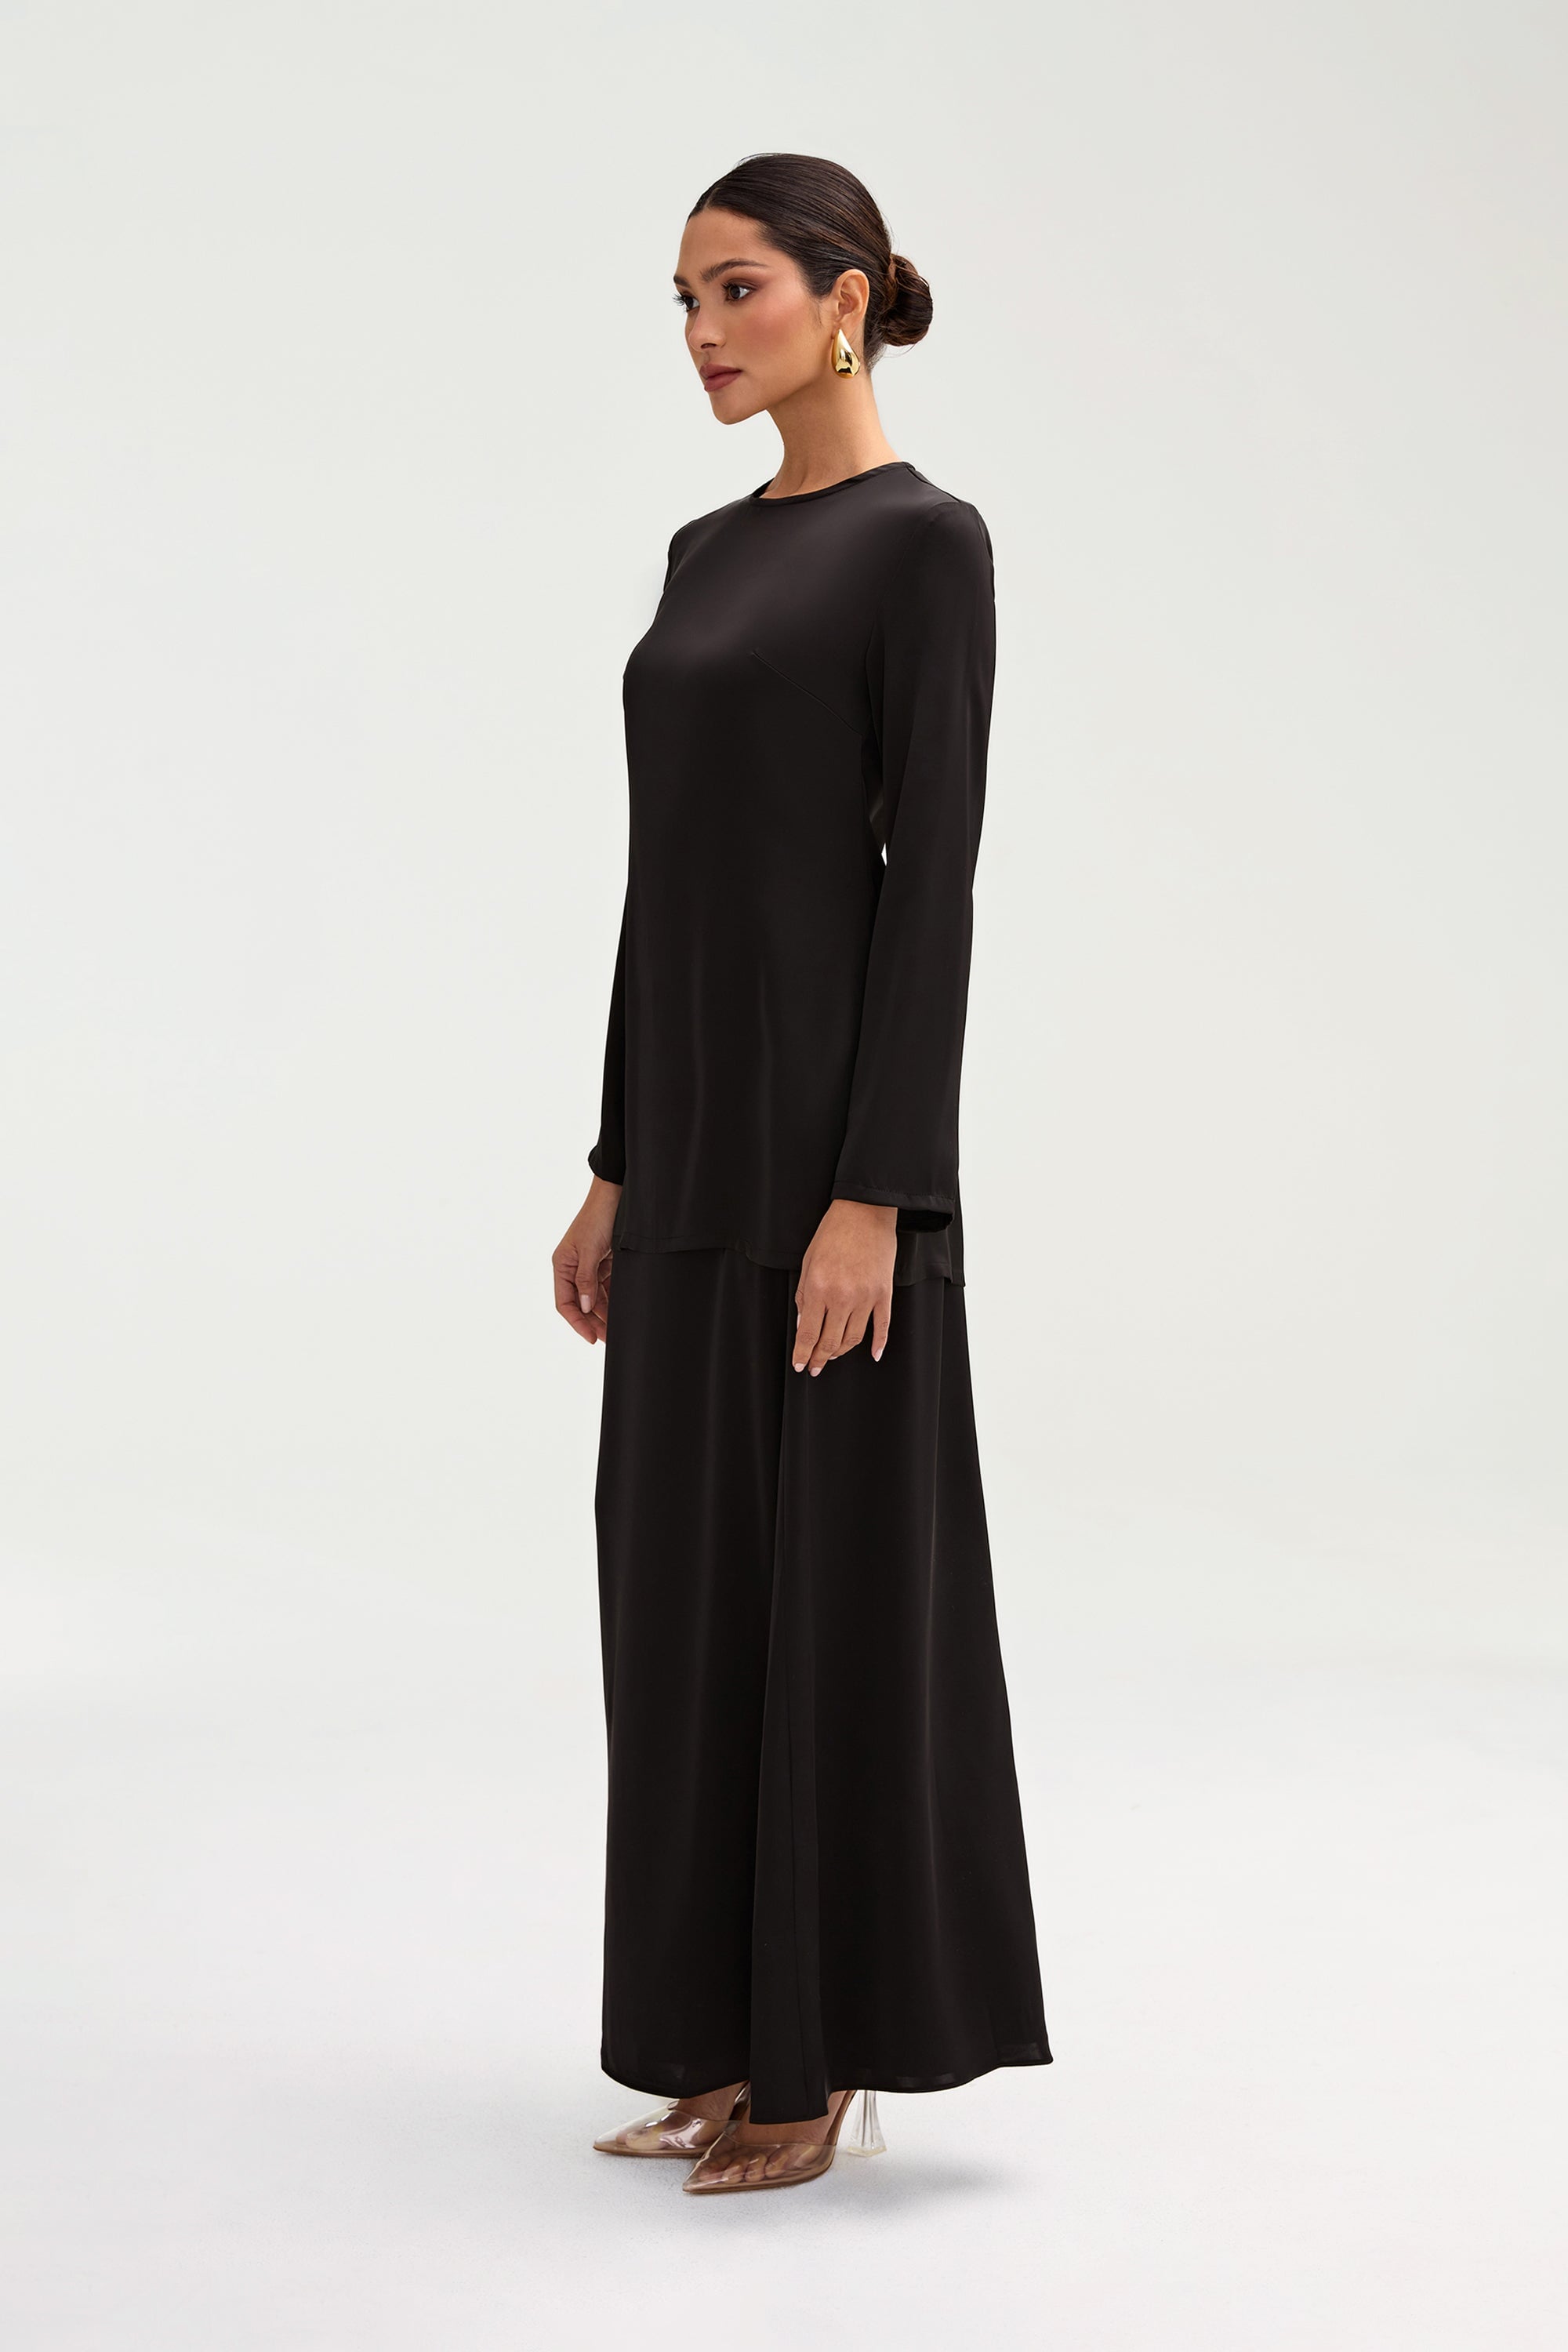 Essential Satin Top - Black Clothing Veiled 